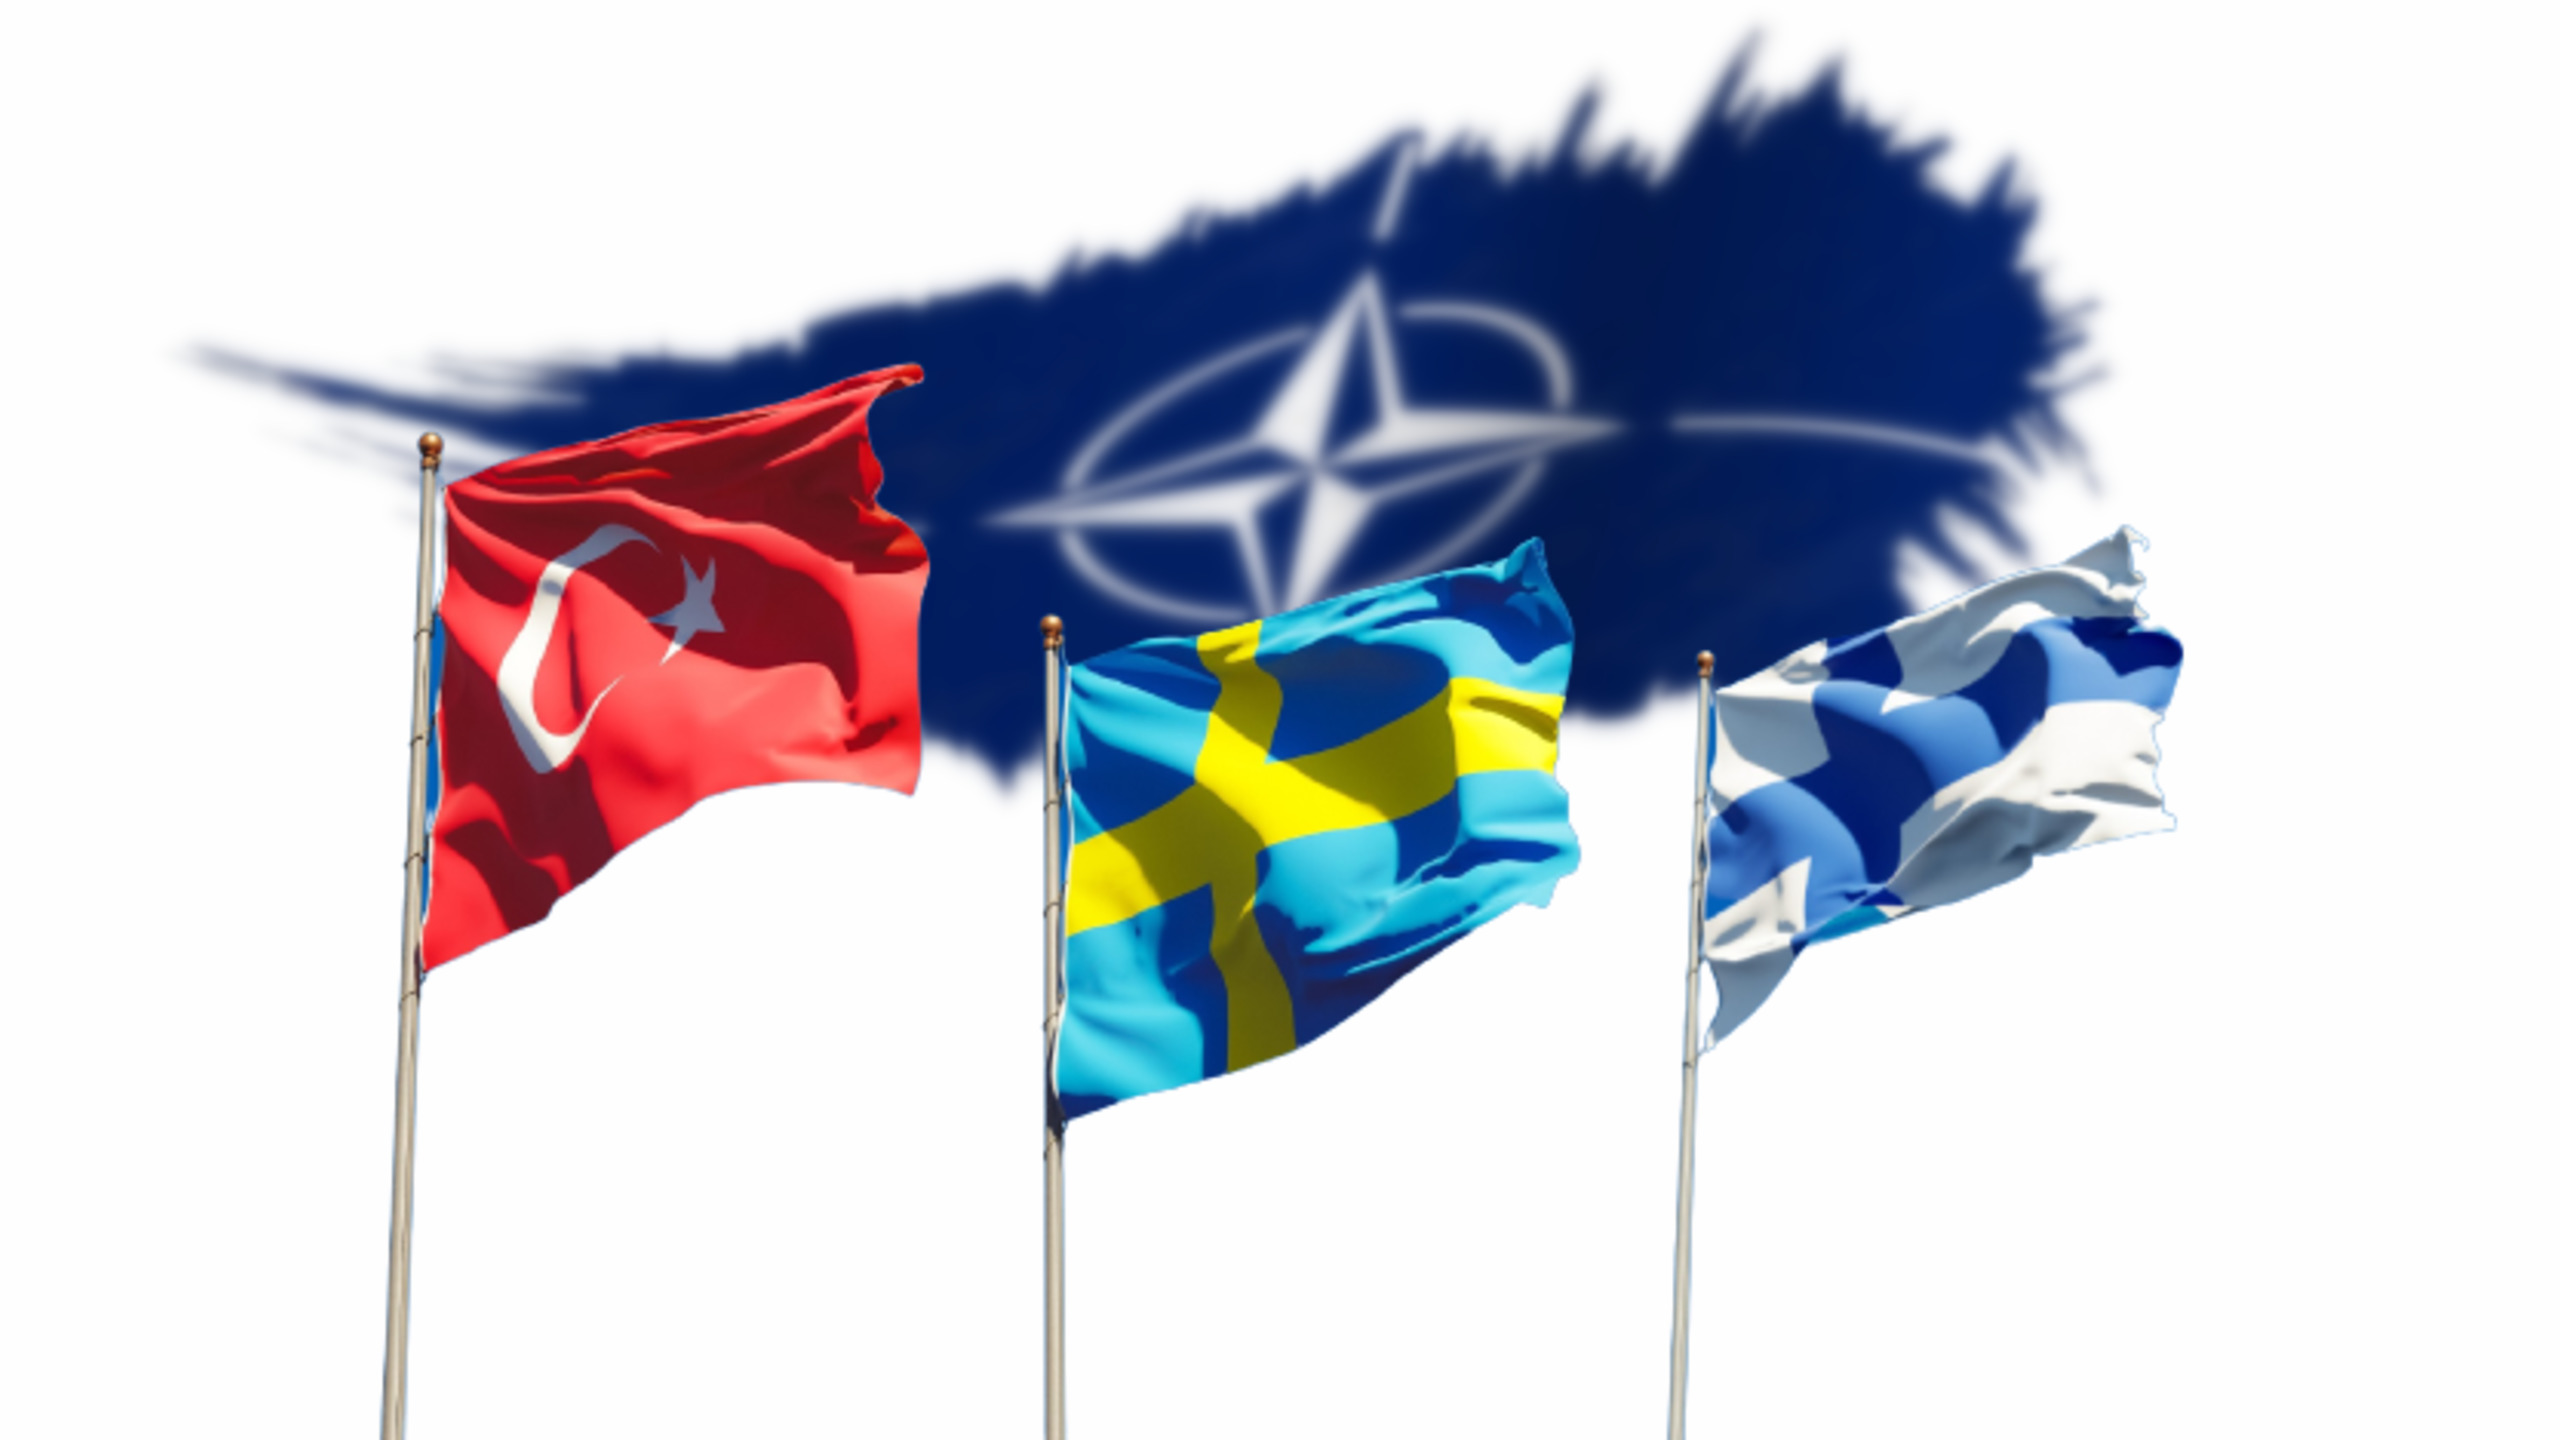 Erdoğan Informs Allies: We Will Nix NATO Expansion if Sweden, Finland Do Not Extradite ‘Terrorists’